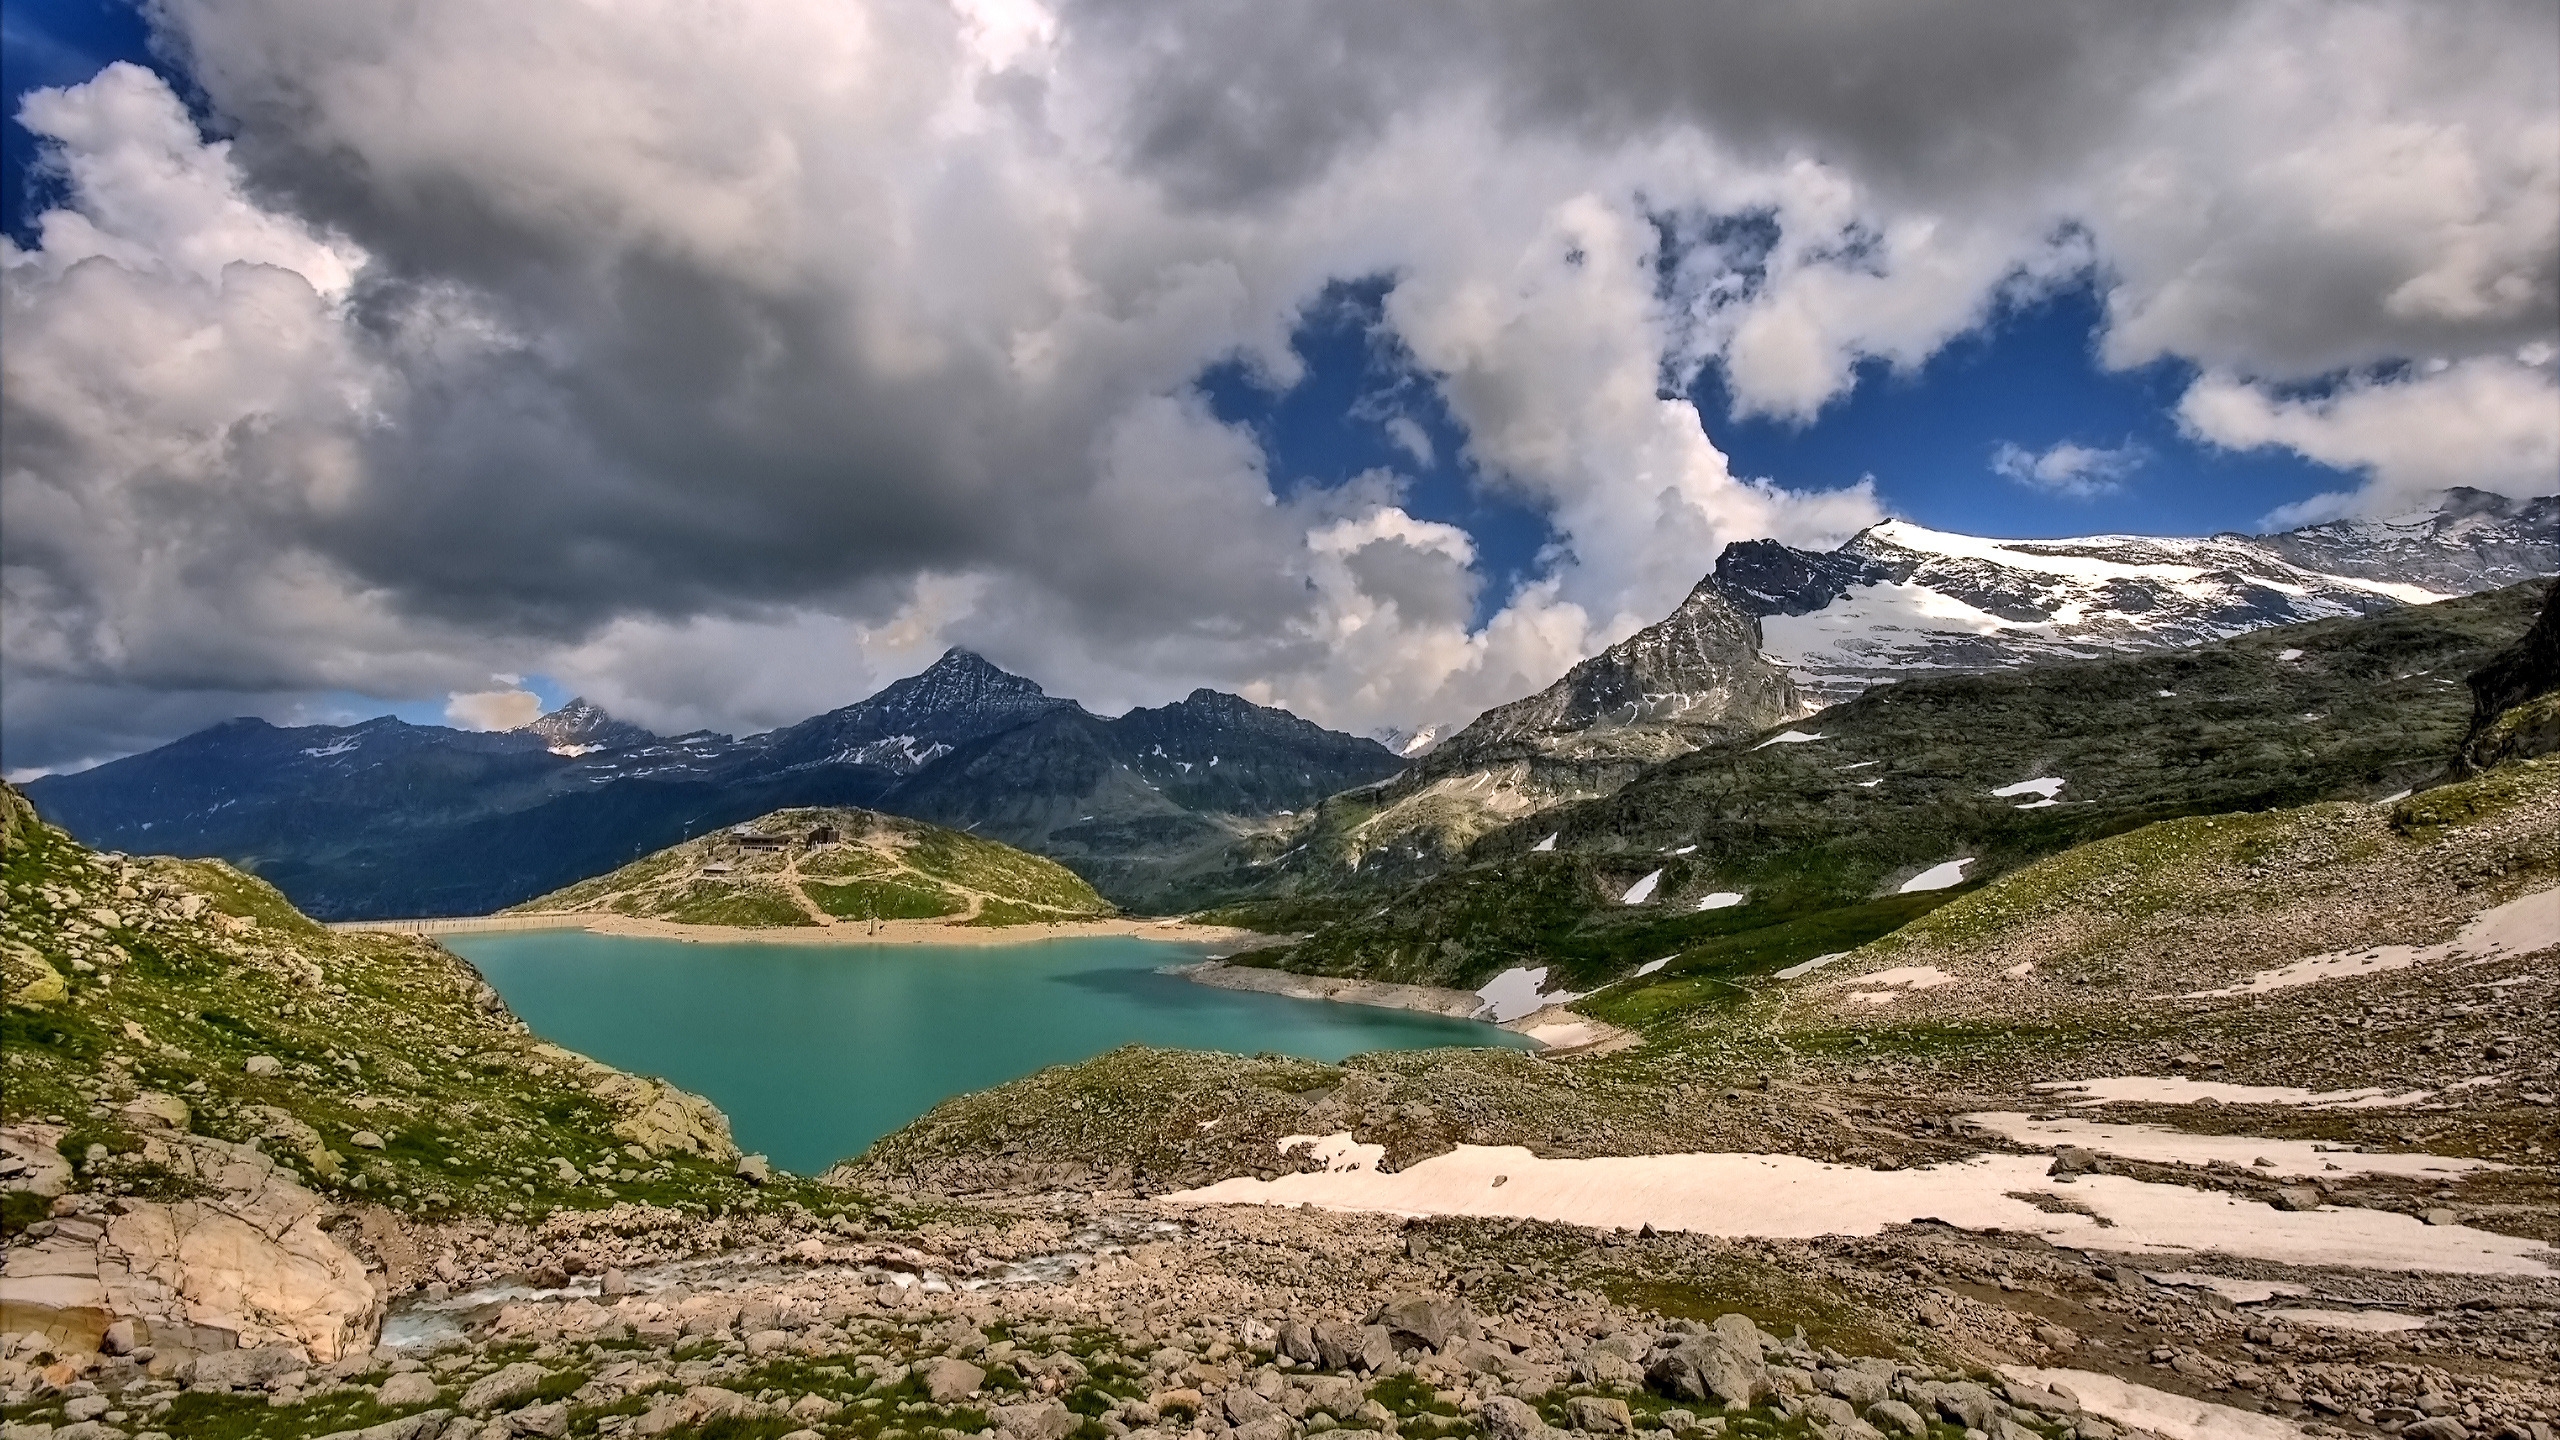 High Alpine Landscape for 2560x1440 HDTV resolution